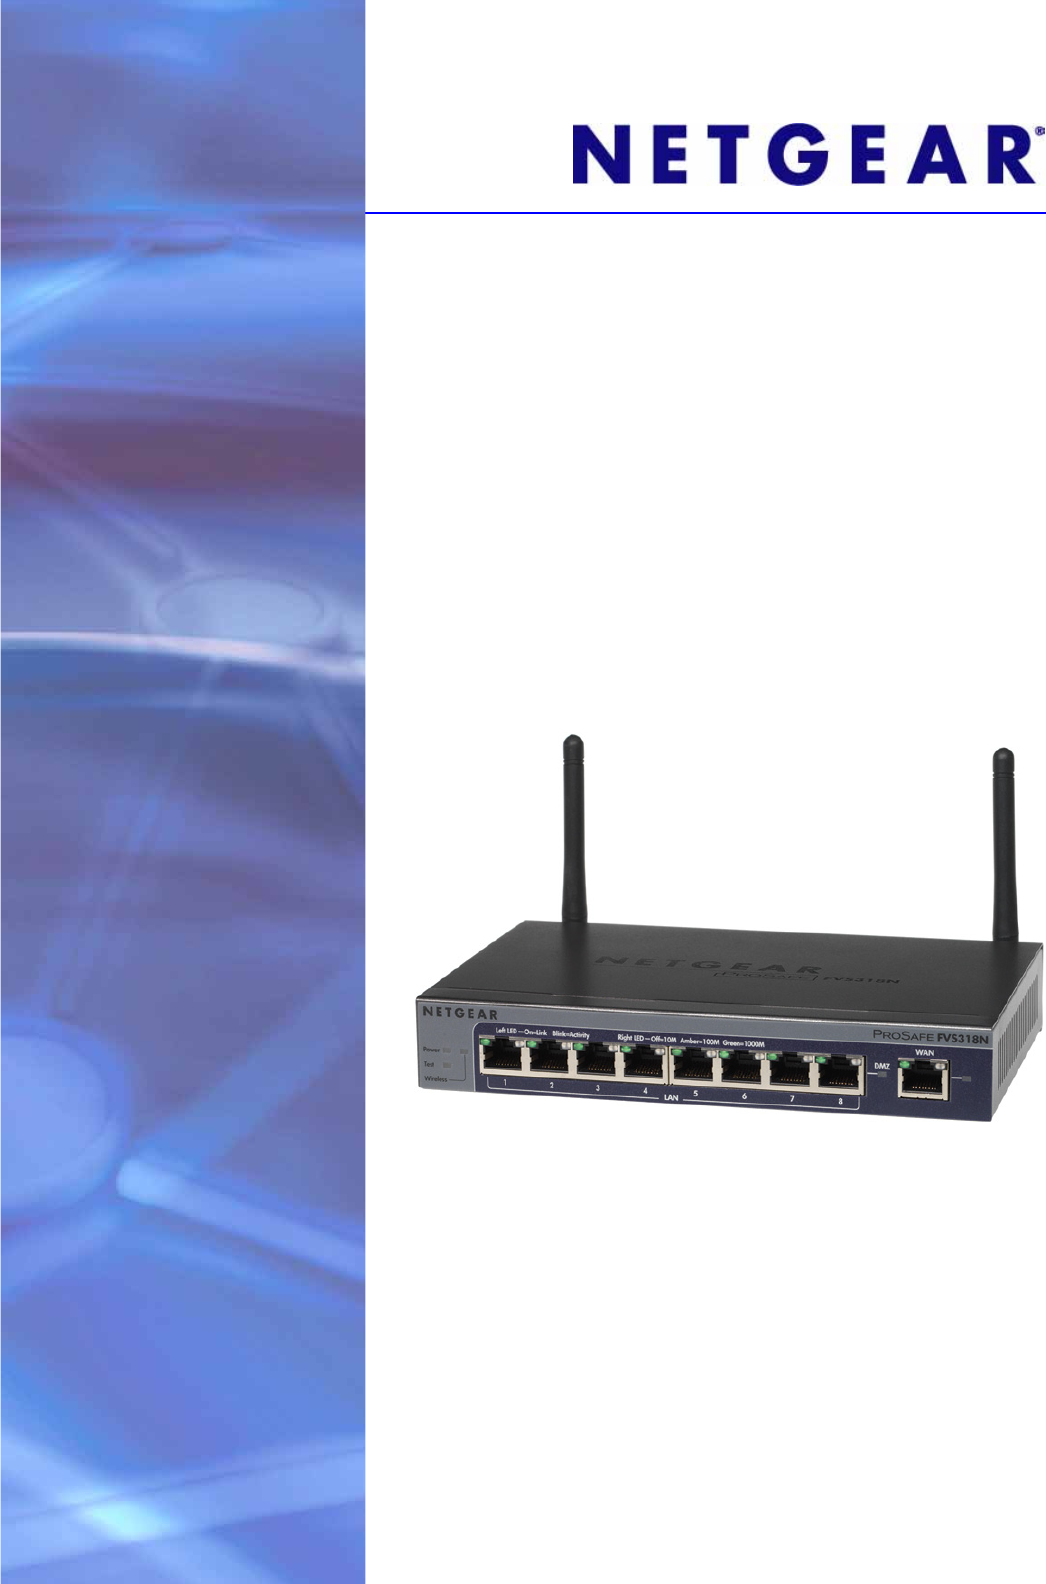 Netgear Modem Fvs318n Users Manual Prosafe Wireless N 8 Port